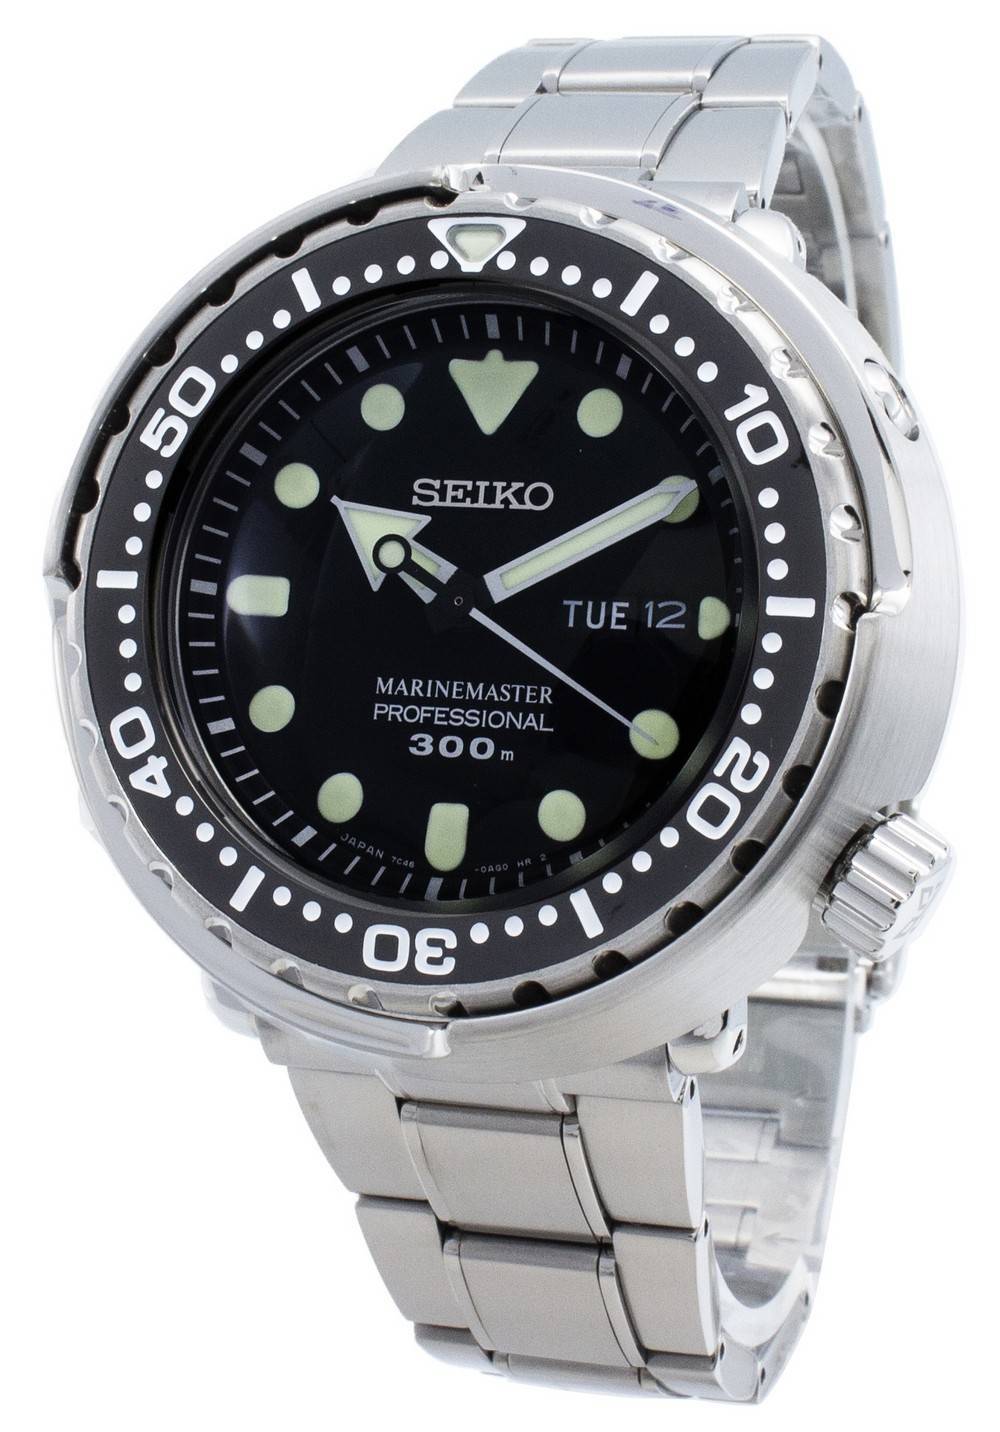 Seiko Prospex MarineMaster Professional 300M SBBN031 Men's Watch